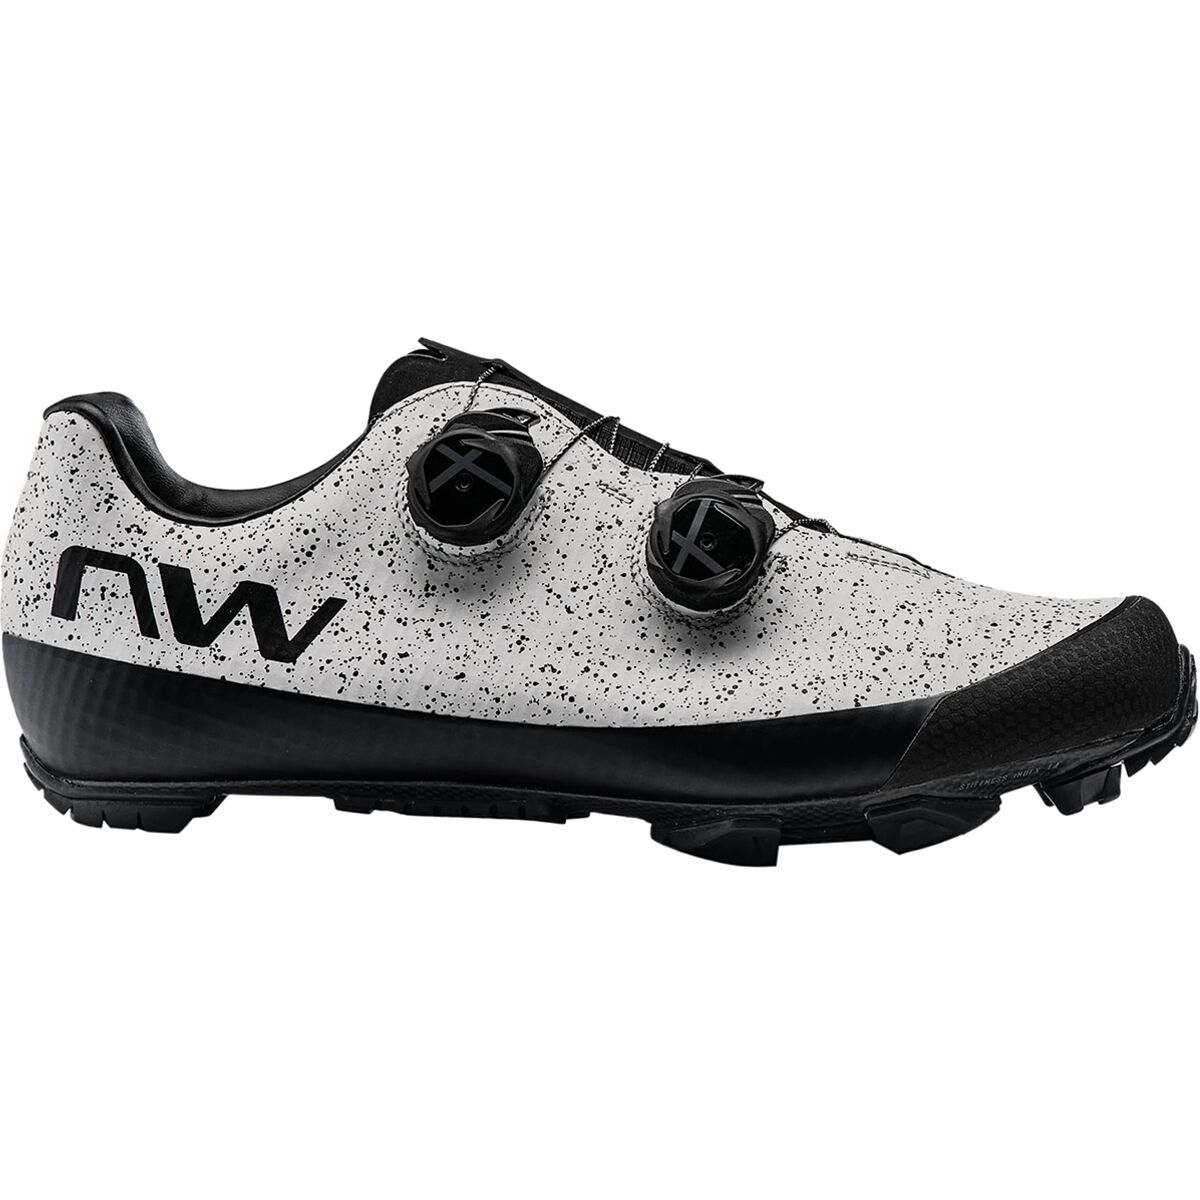 Northwave Extreme XC 2 Mountain Bike Shoe - Men's